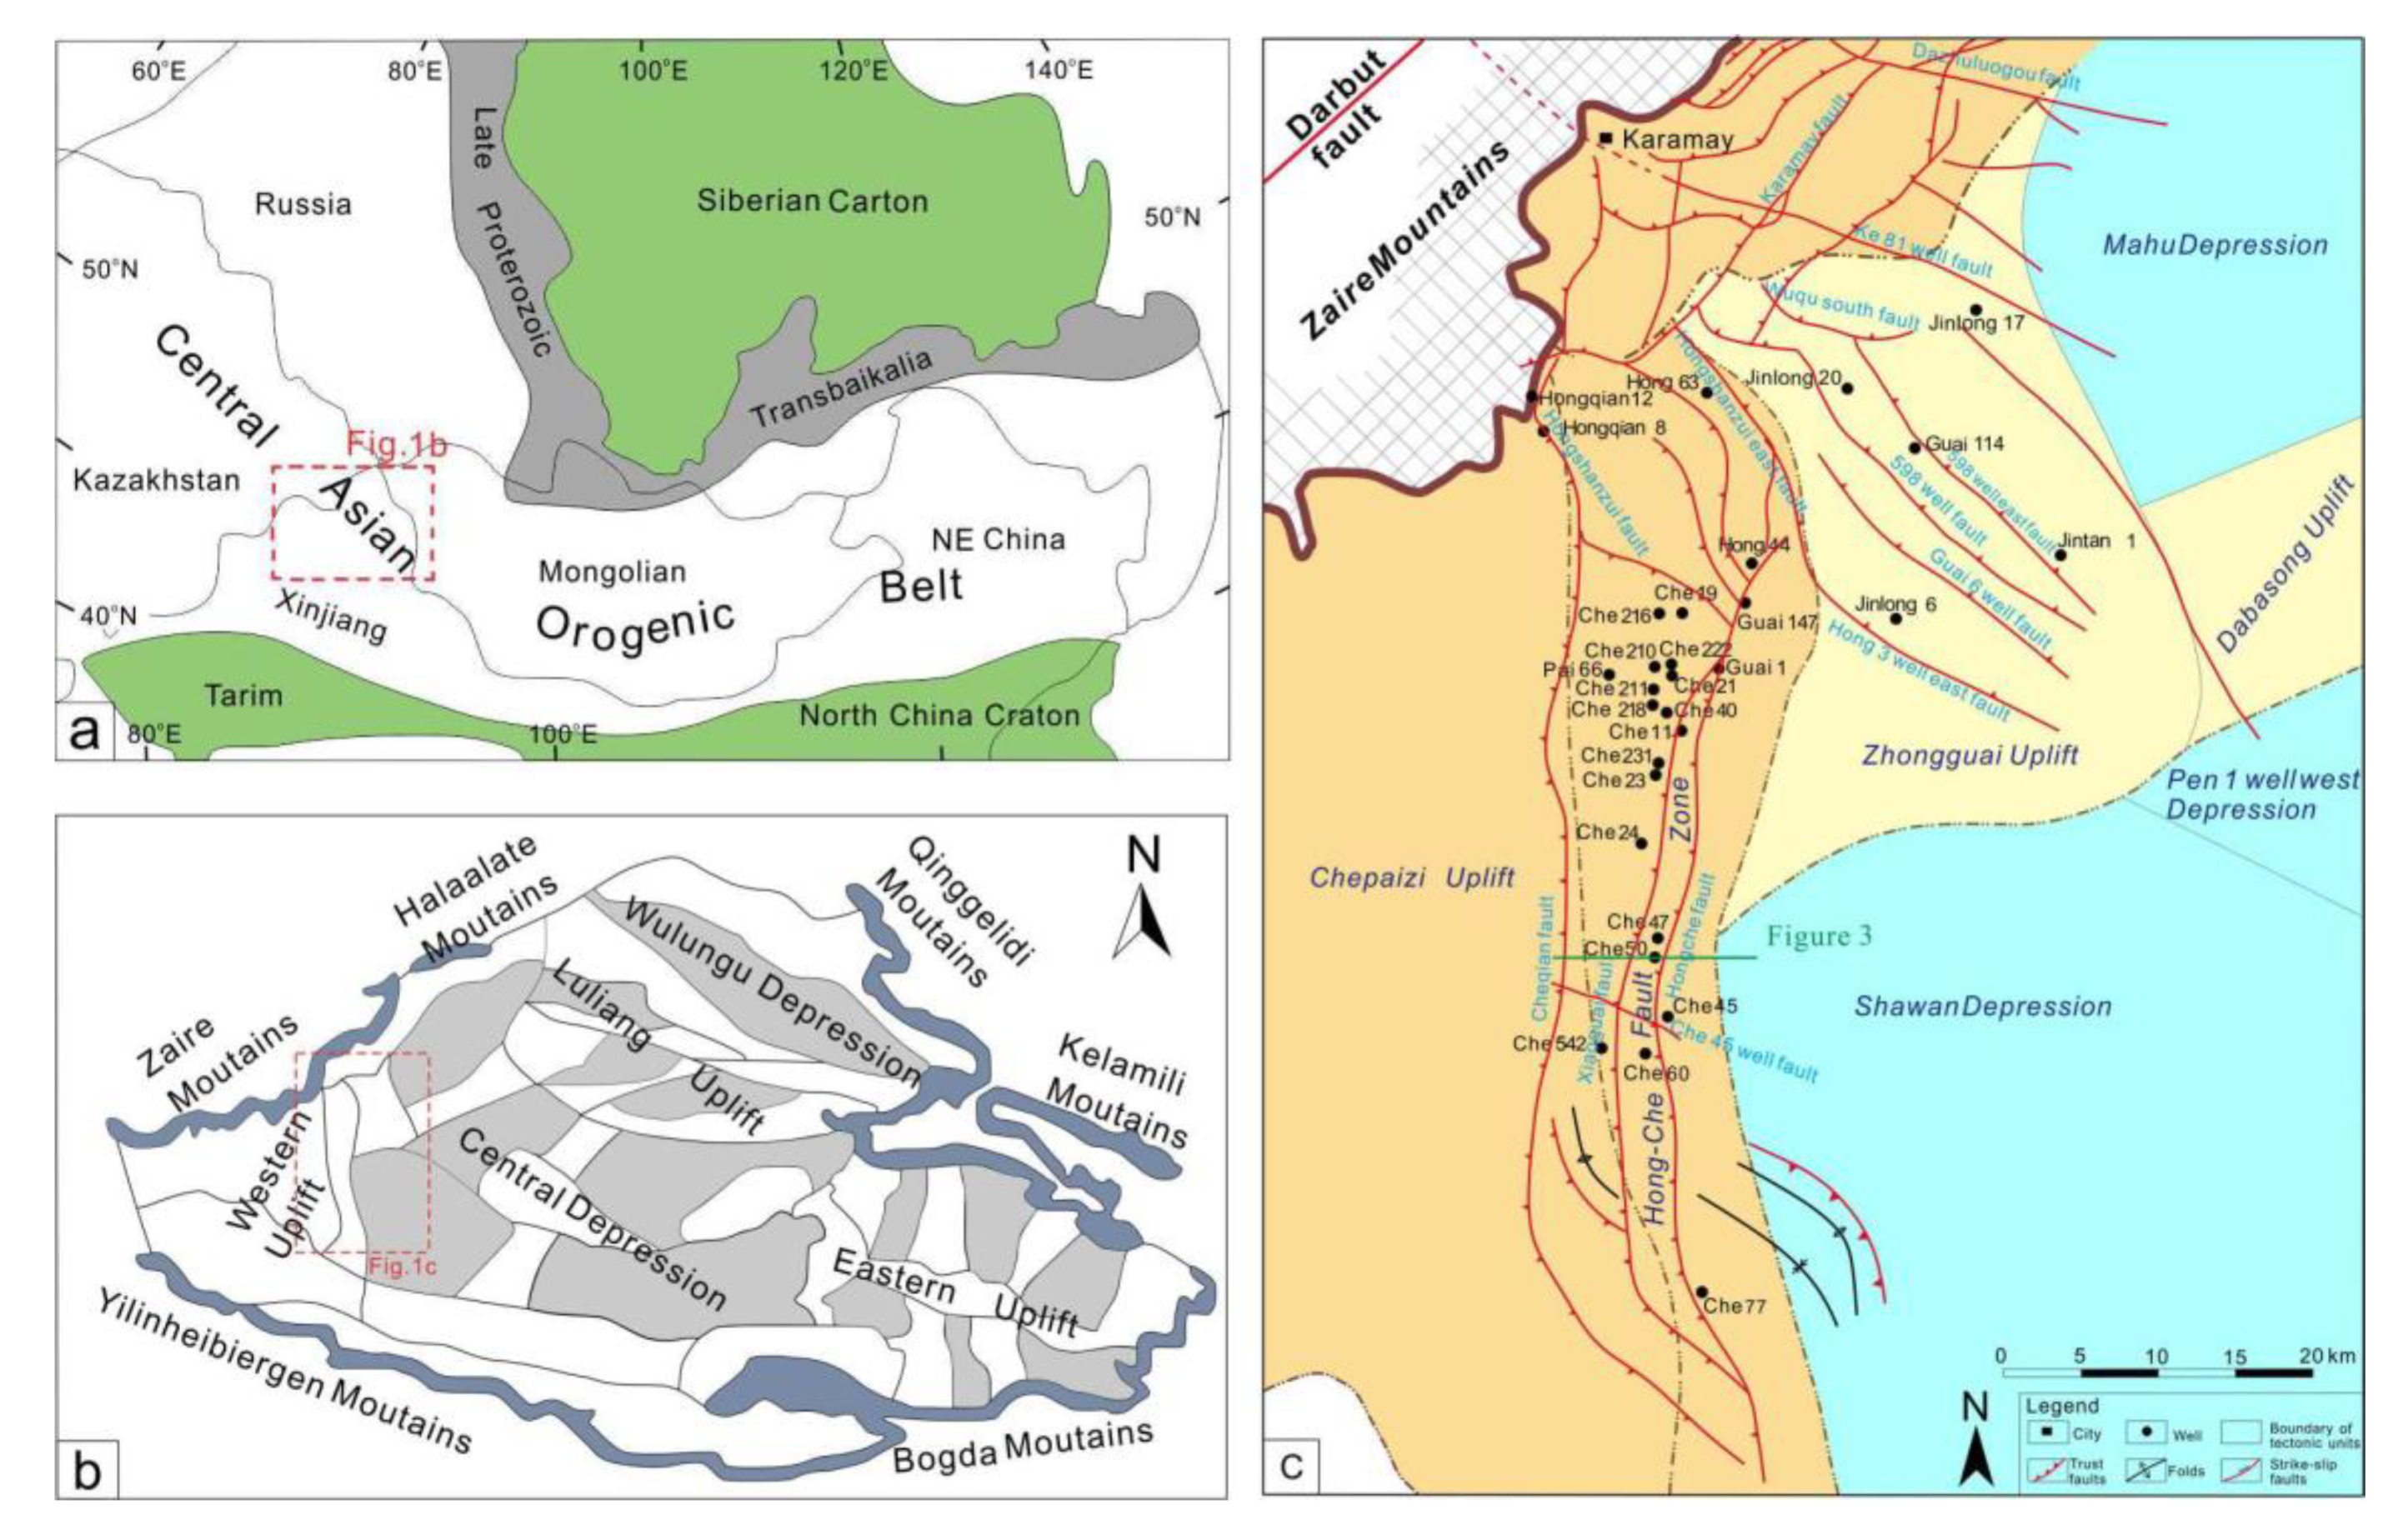 junggar basin map